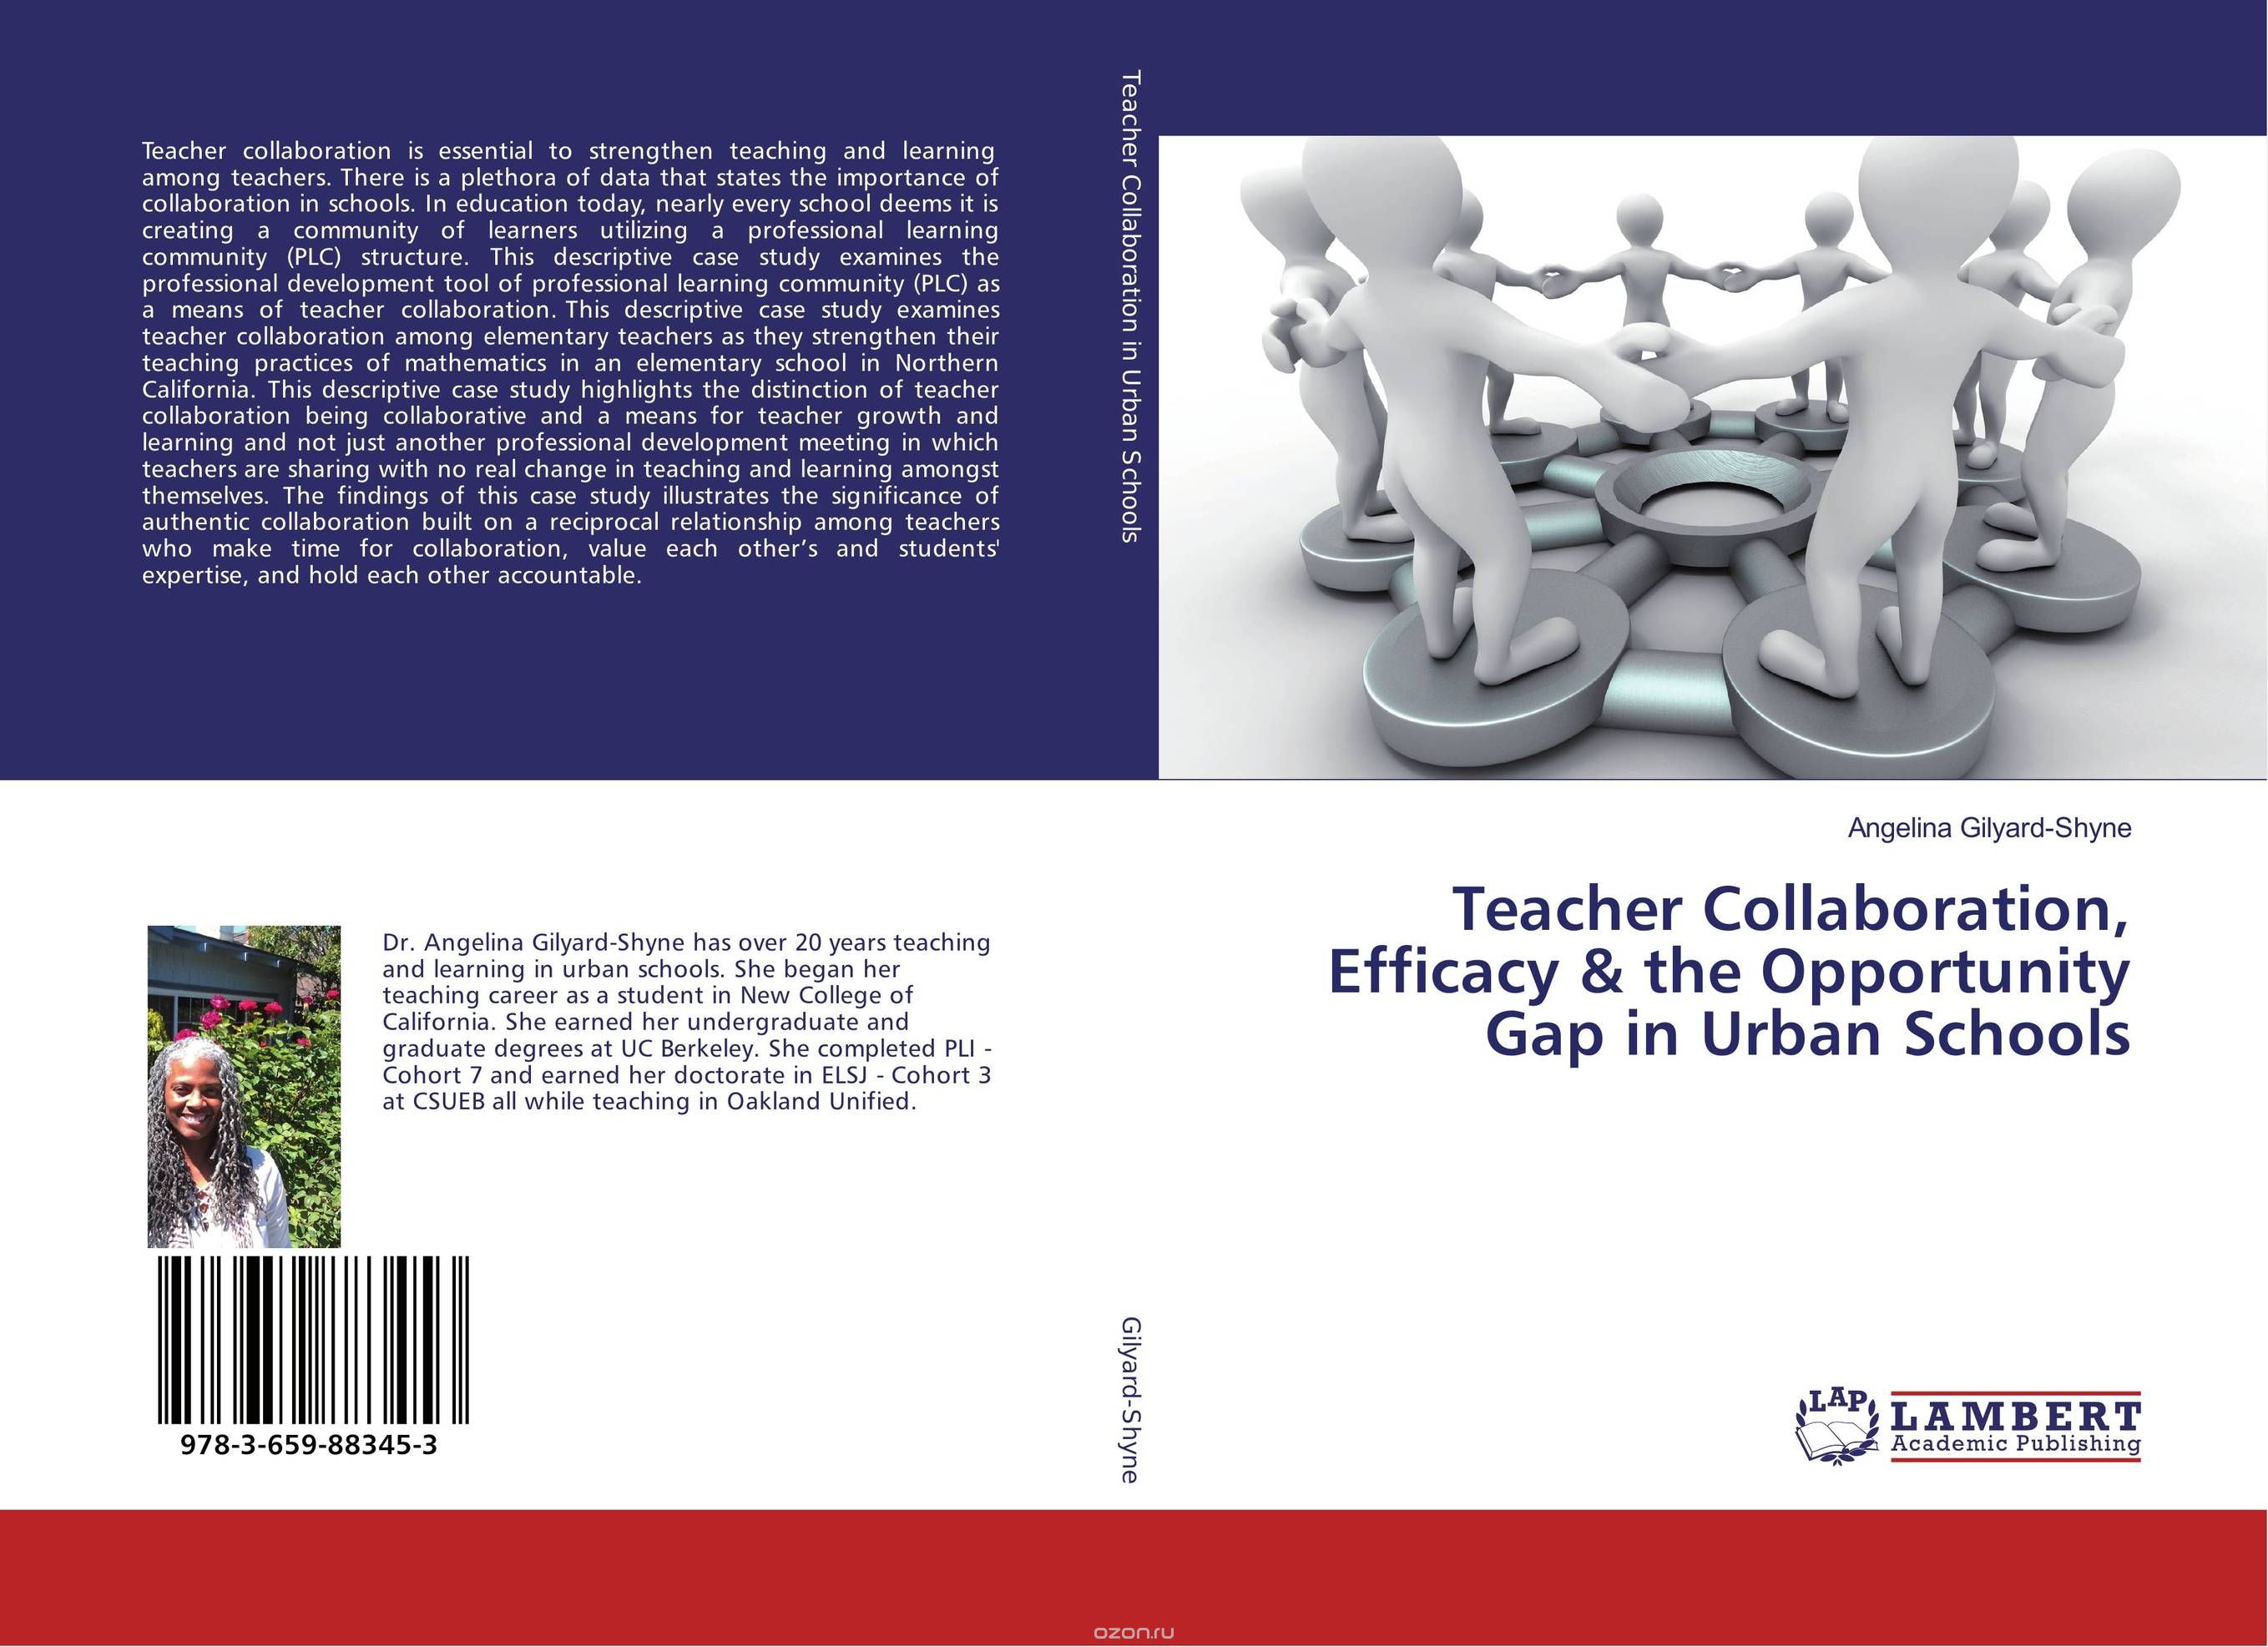 Скачать книгу "Teacher Collaboration, Efficacy & the Opportunity Gap in Urban Schools"